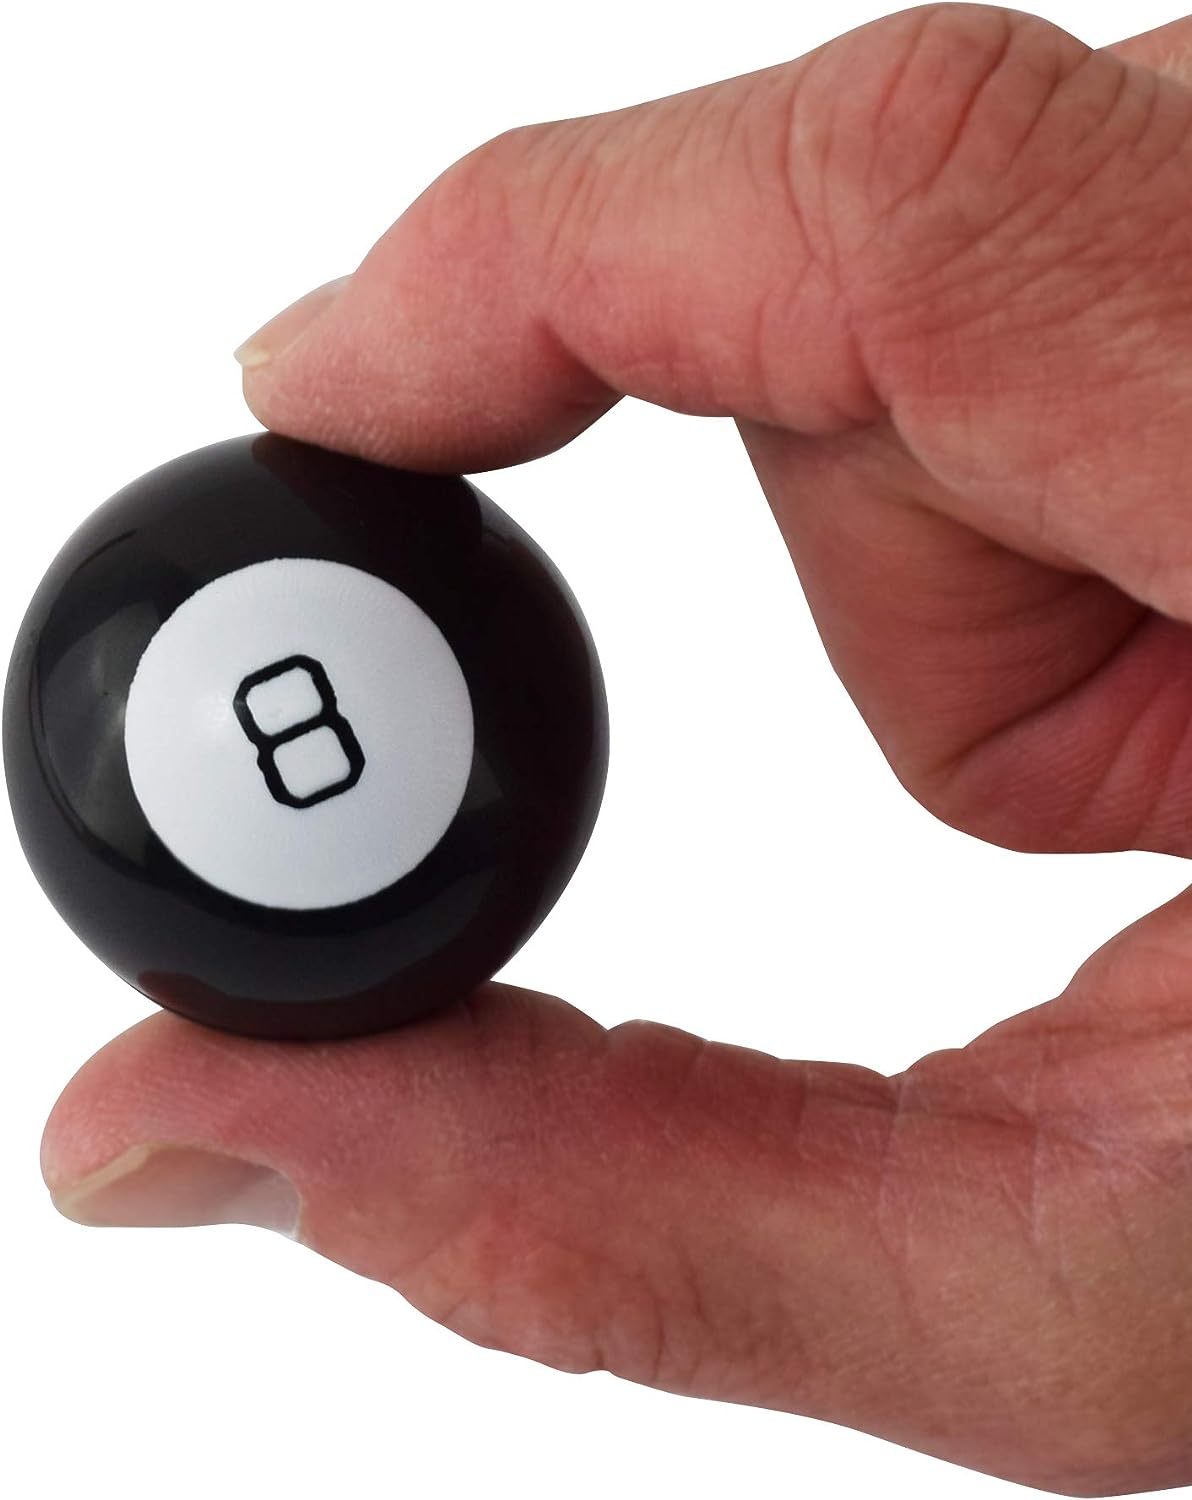 World's Smallest - Magic 8 Ball